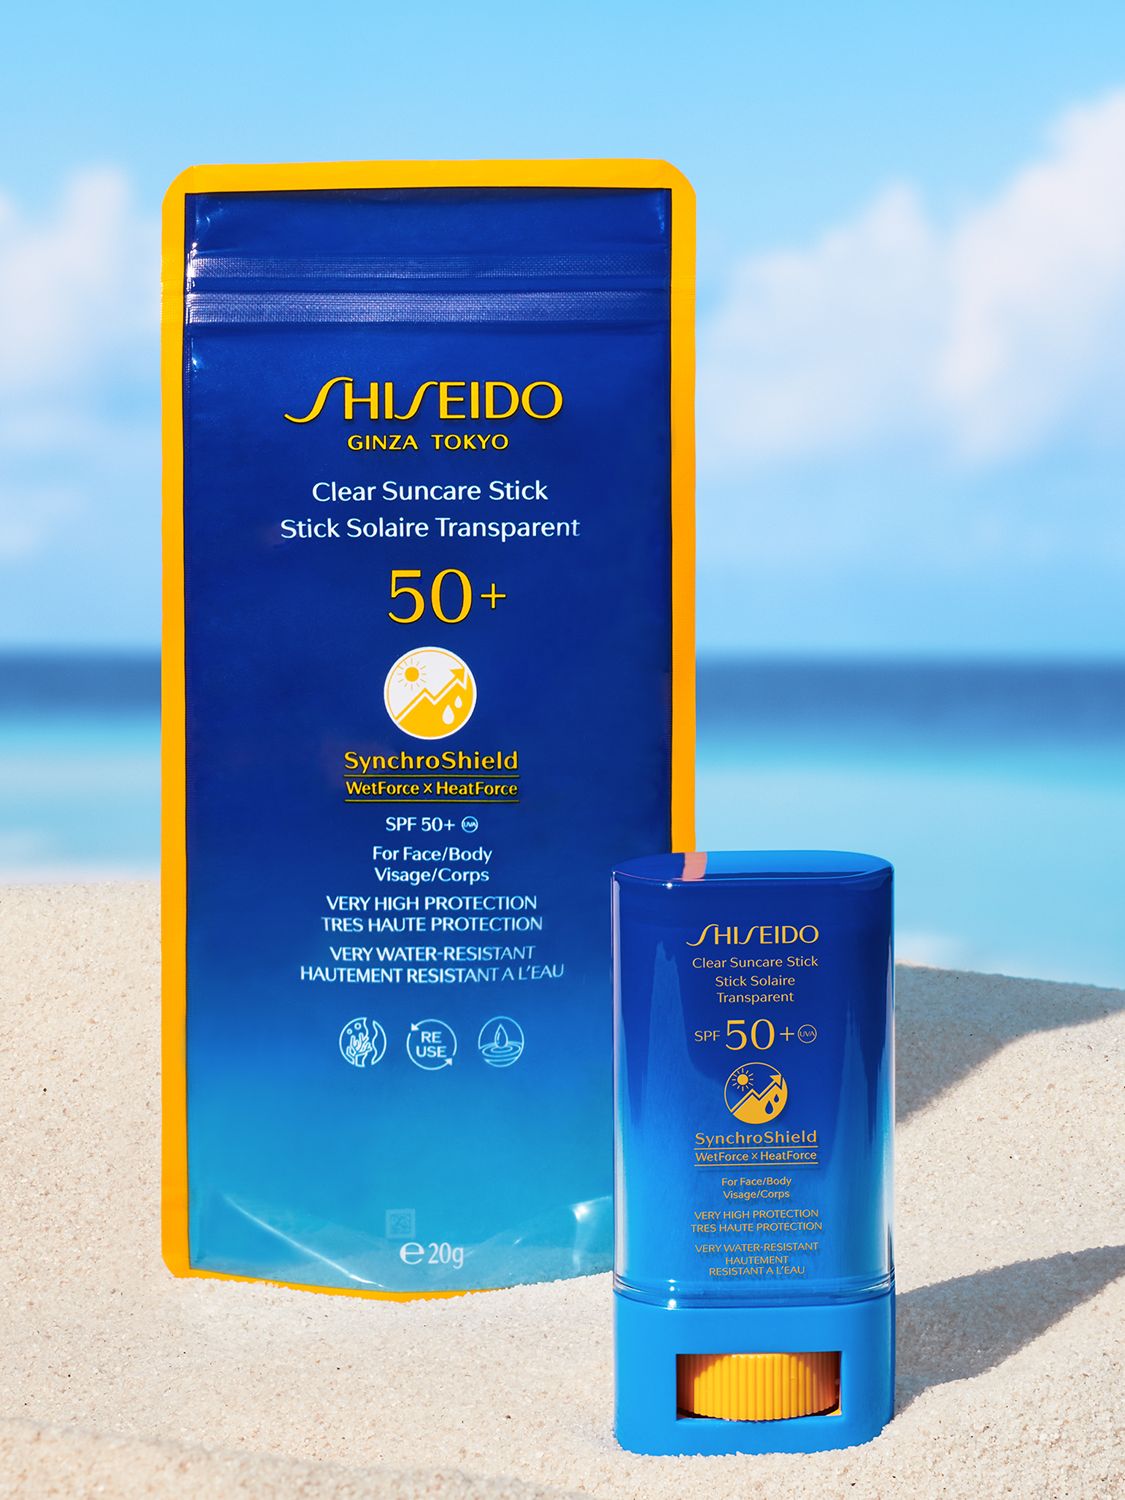 Shiseido Clear Suncare Stick SPF 50+, 20g 5